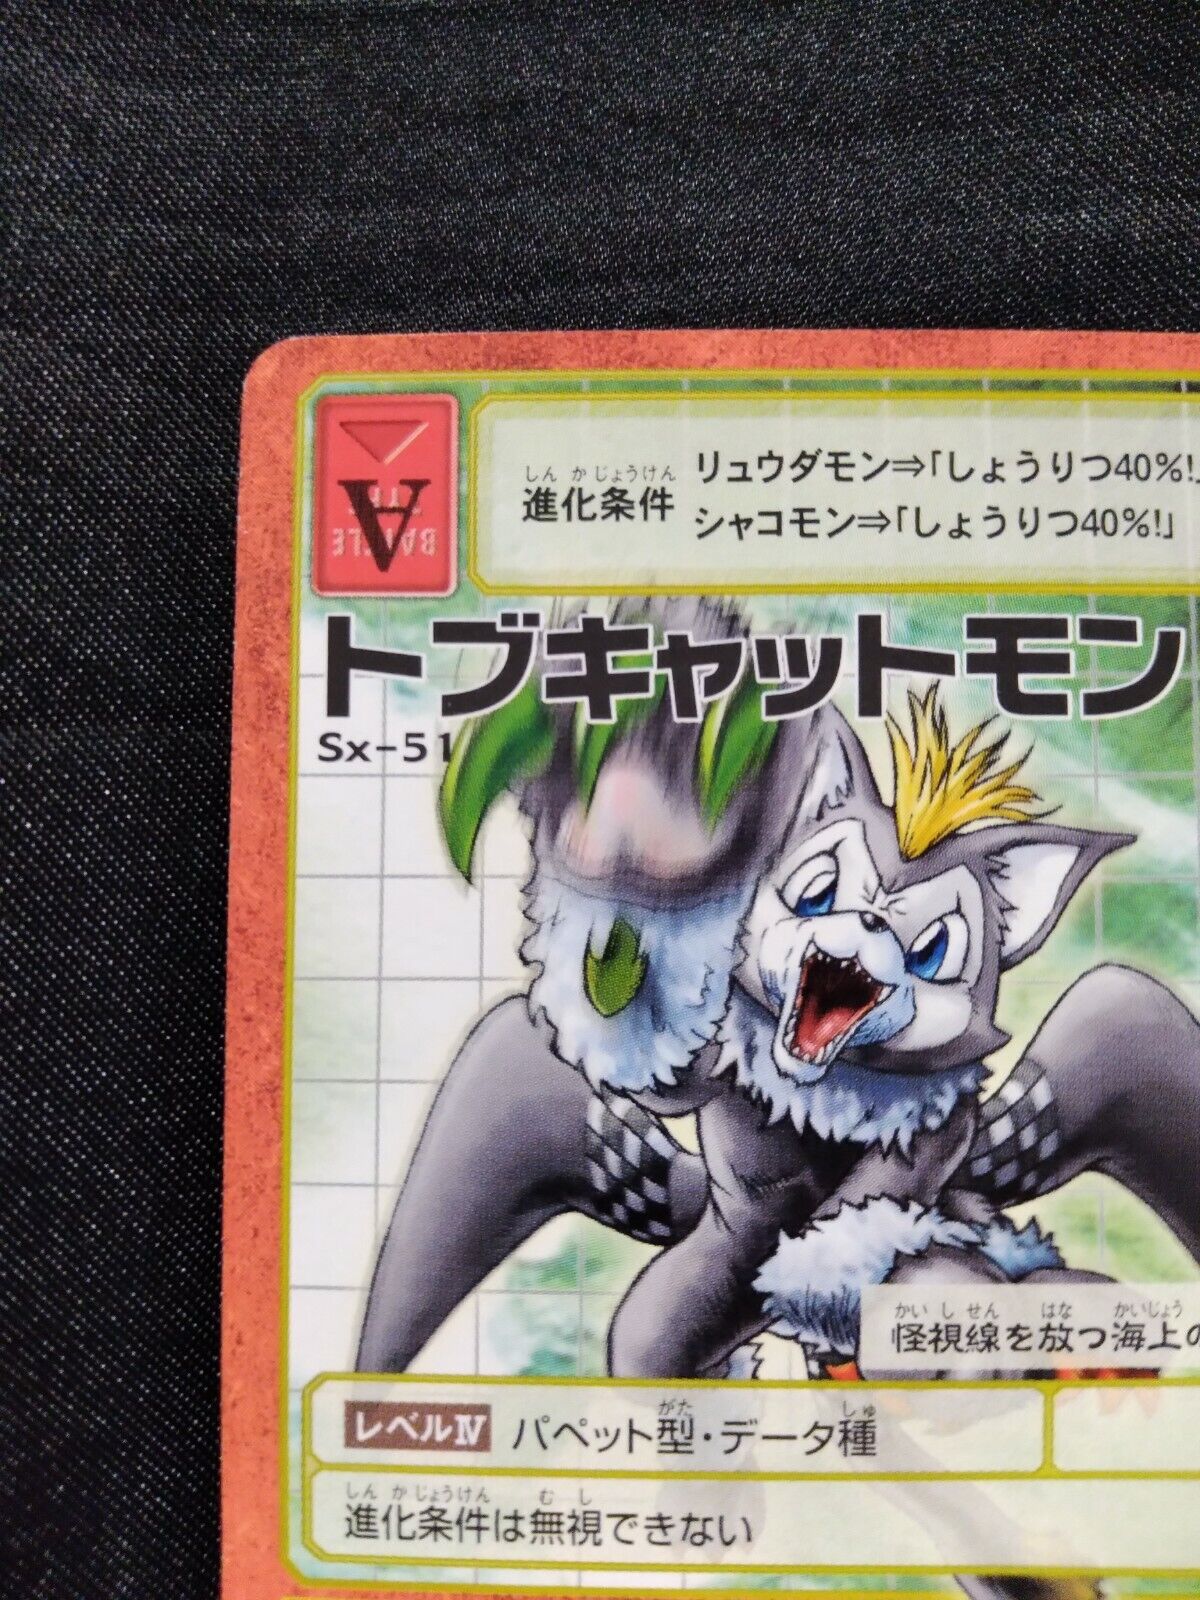 Tobucatmon Sx-51 Digimon Adventure Card BANDAI JAPAN Digital Monster F/S